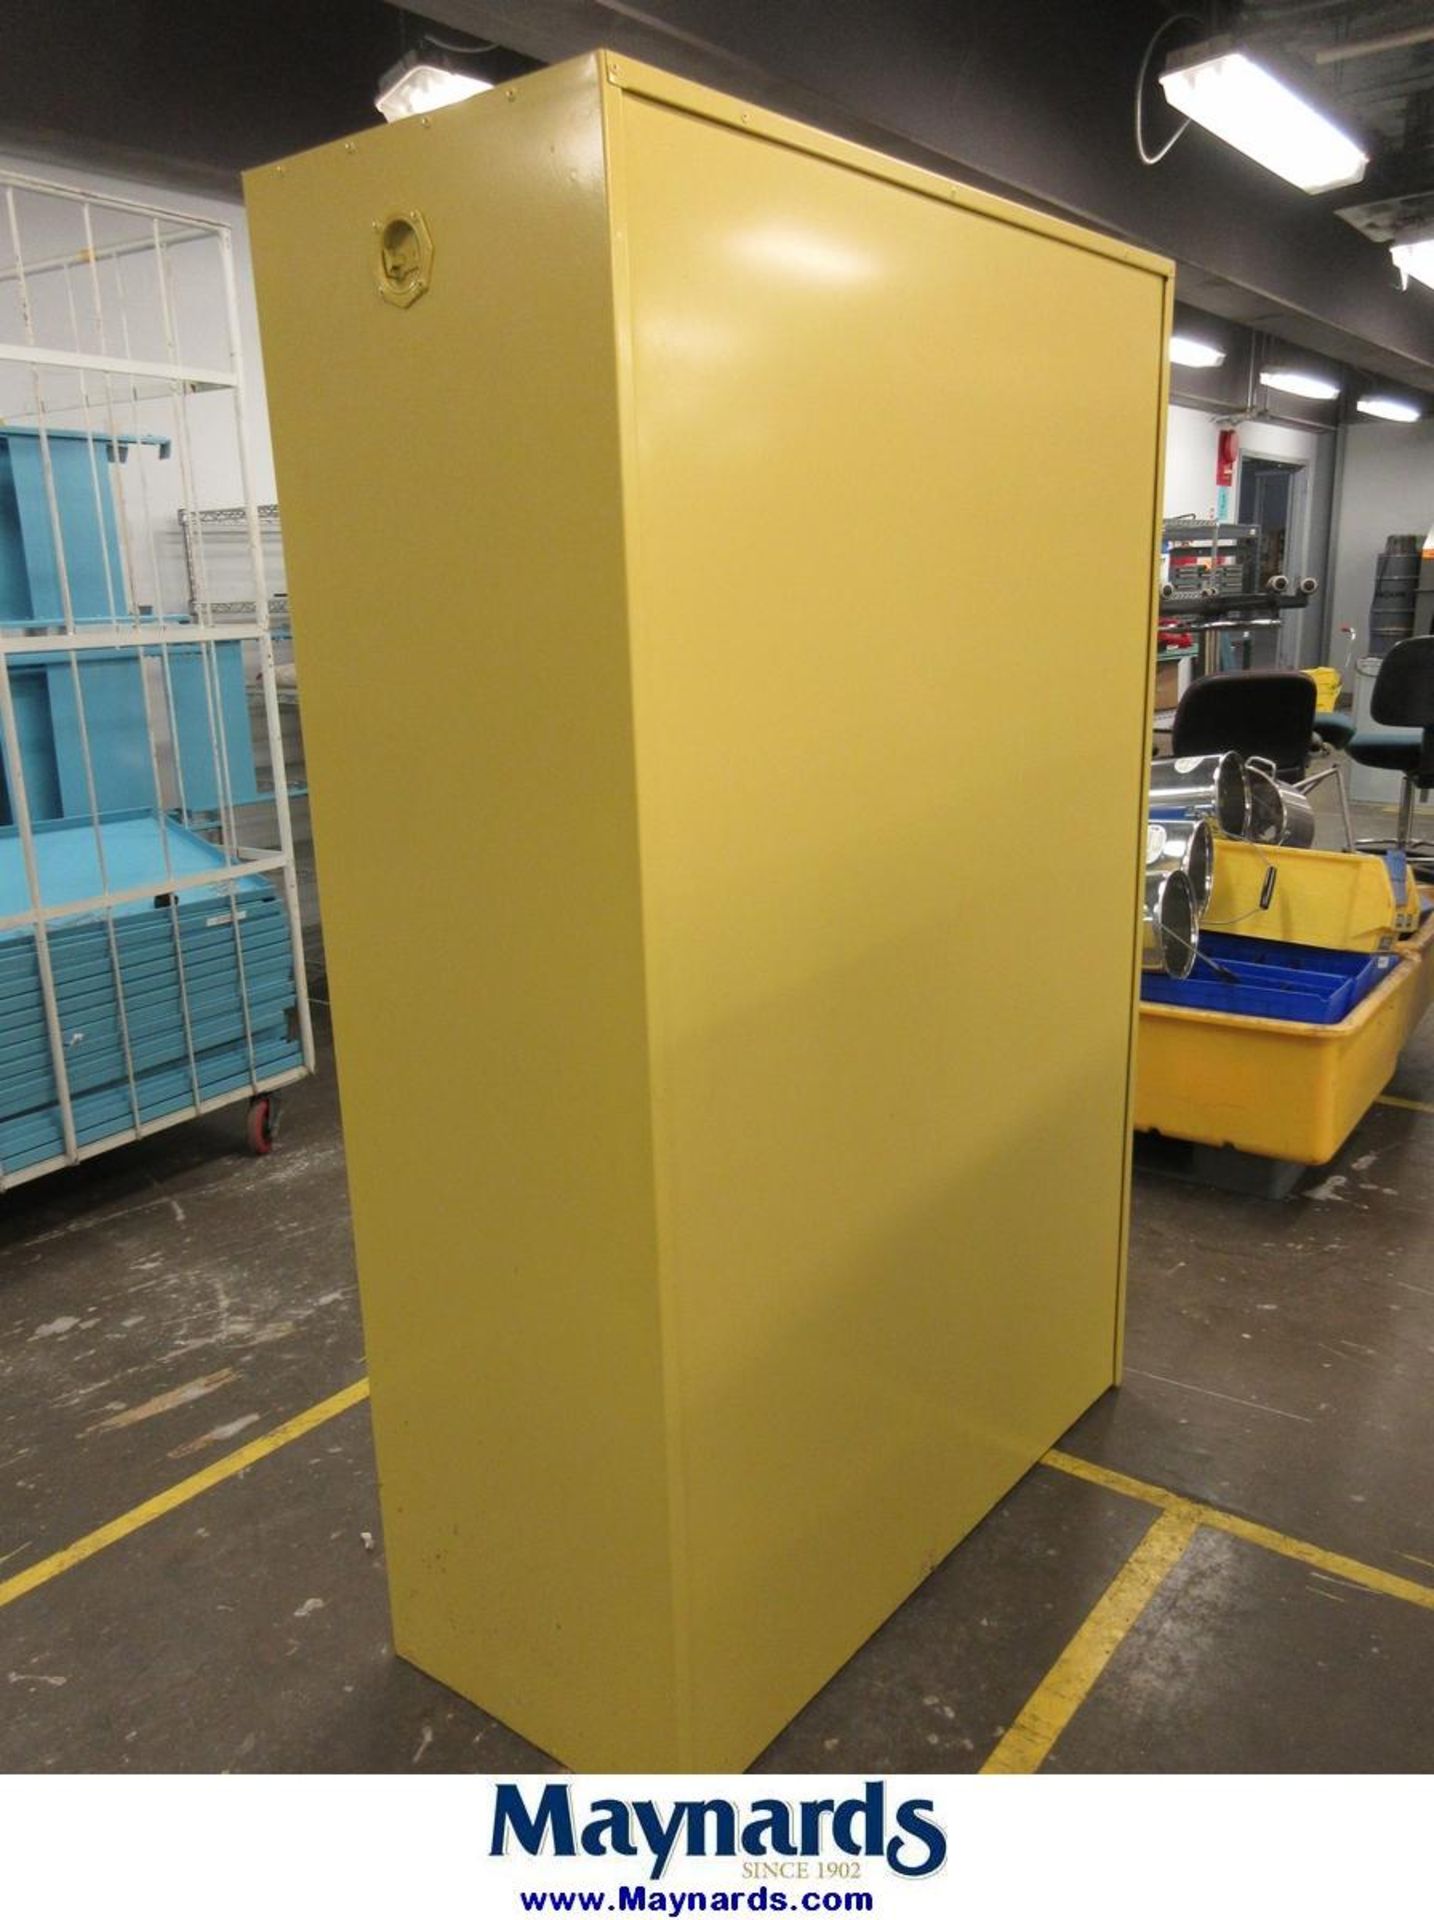 Eagle MFG CO. Model-4510 Heavy Duty Flammable Liquid Storage Cabinet - Image 2 of 2